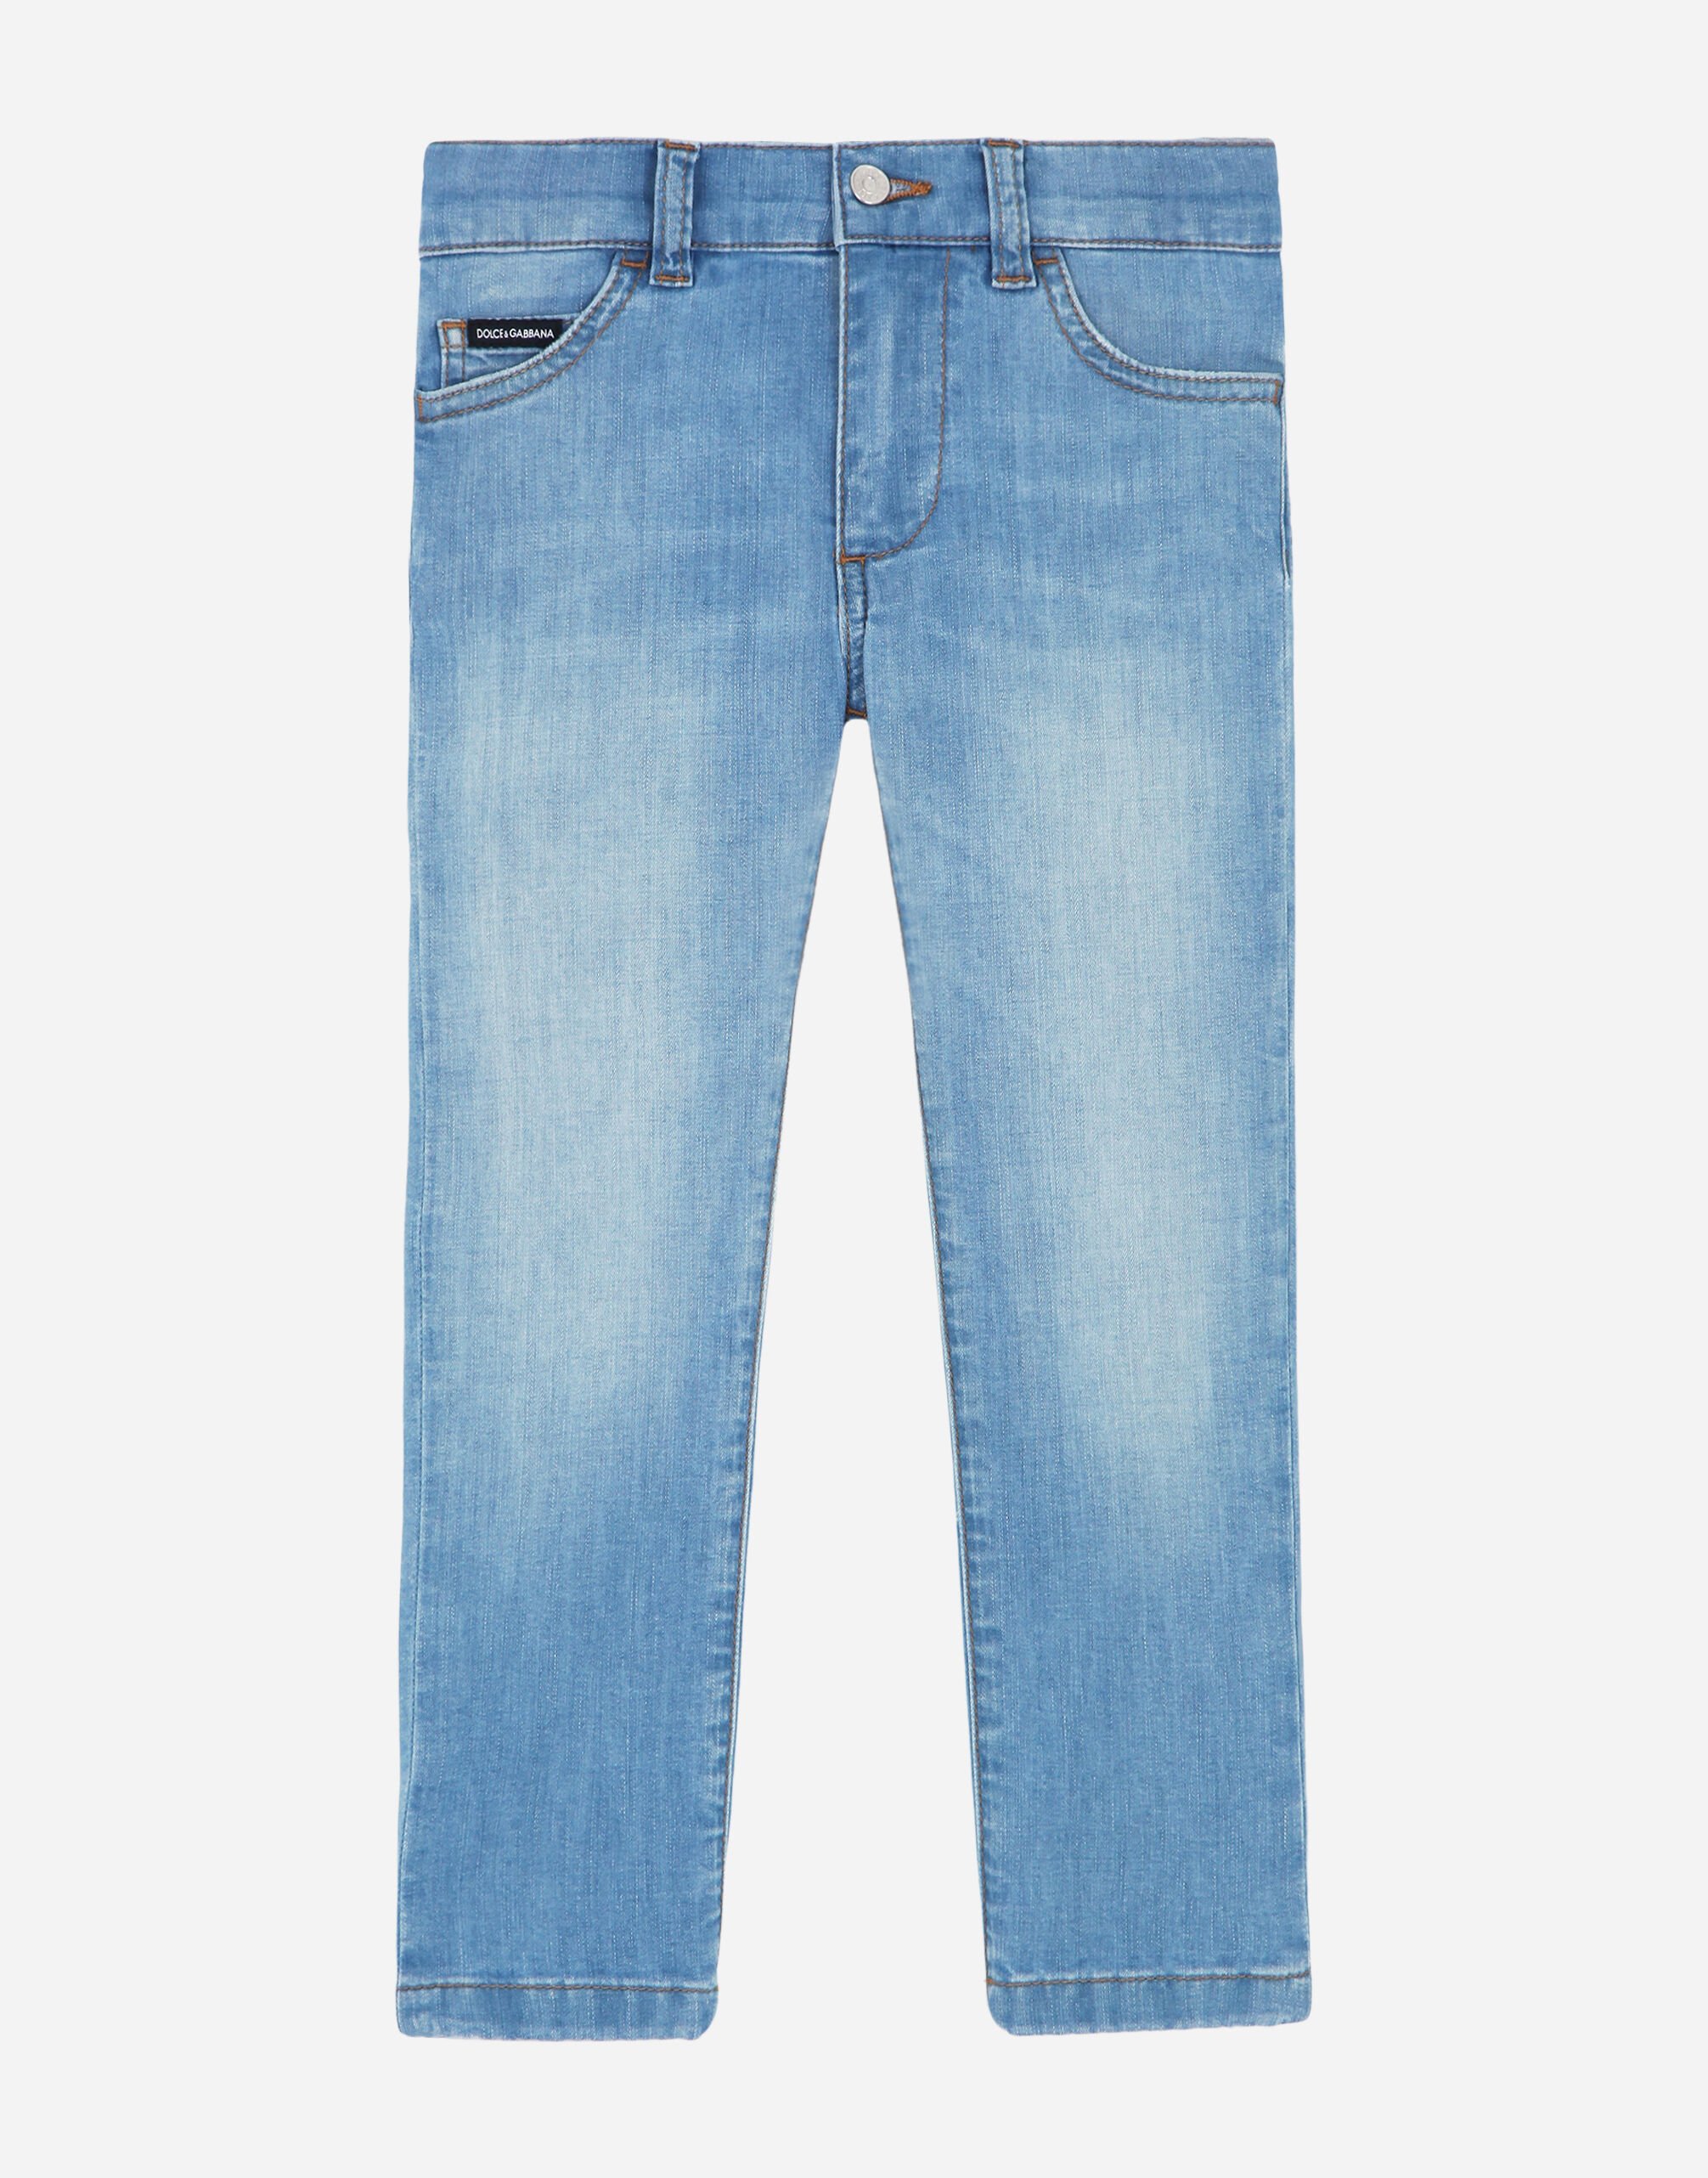 Dolce & Gabbana Stretch slim fit baby blue jeans Multicolor L4JPFNHS7KD